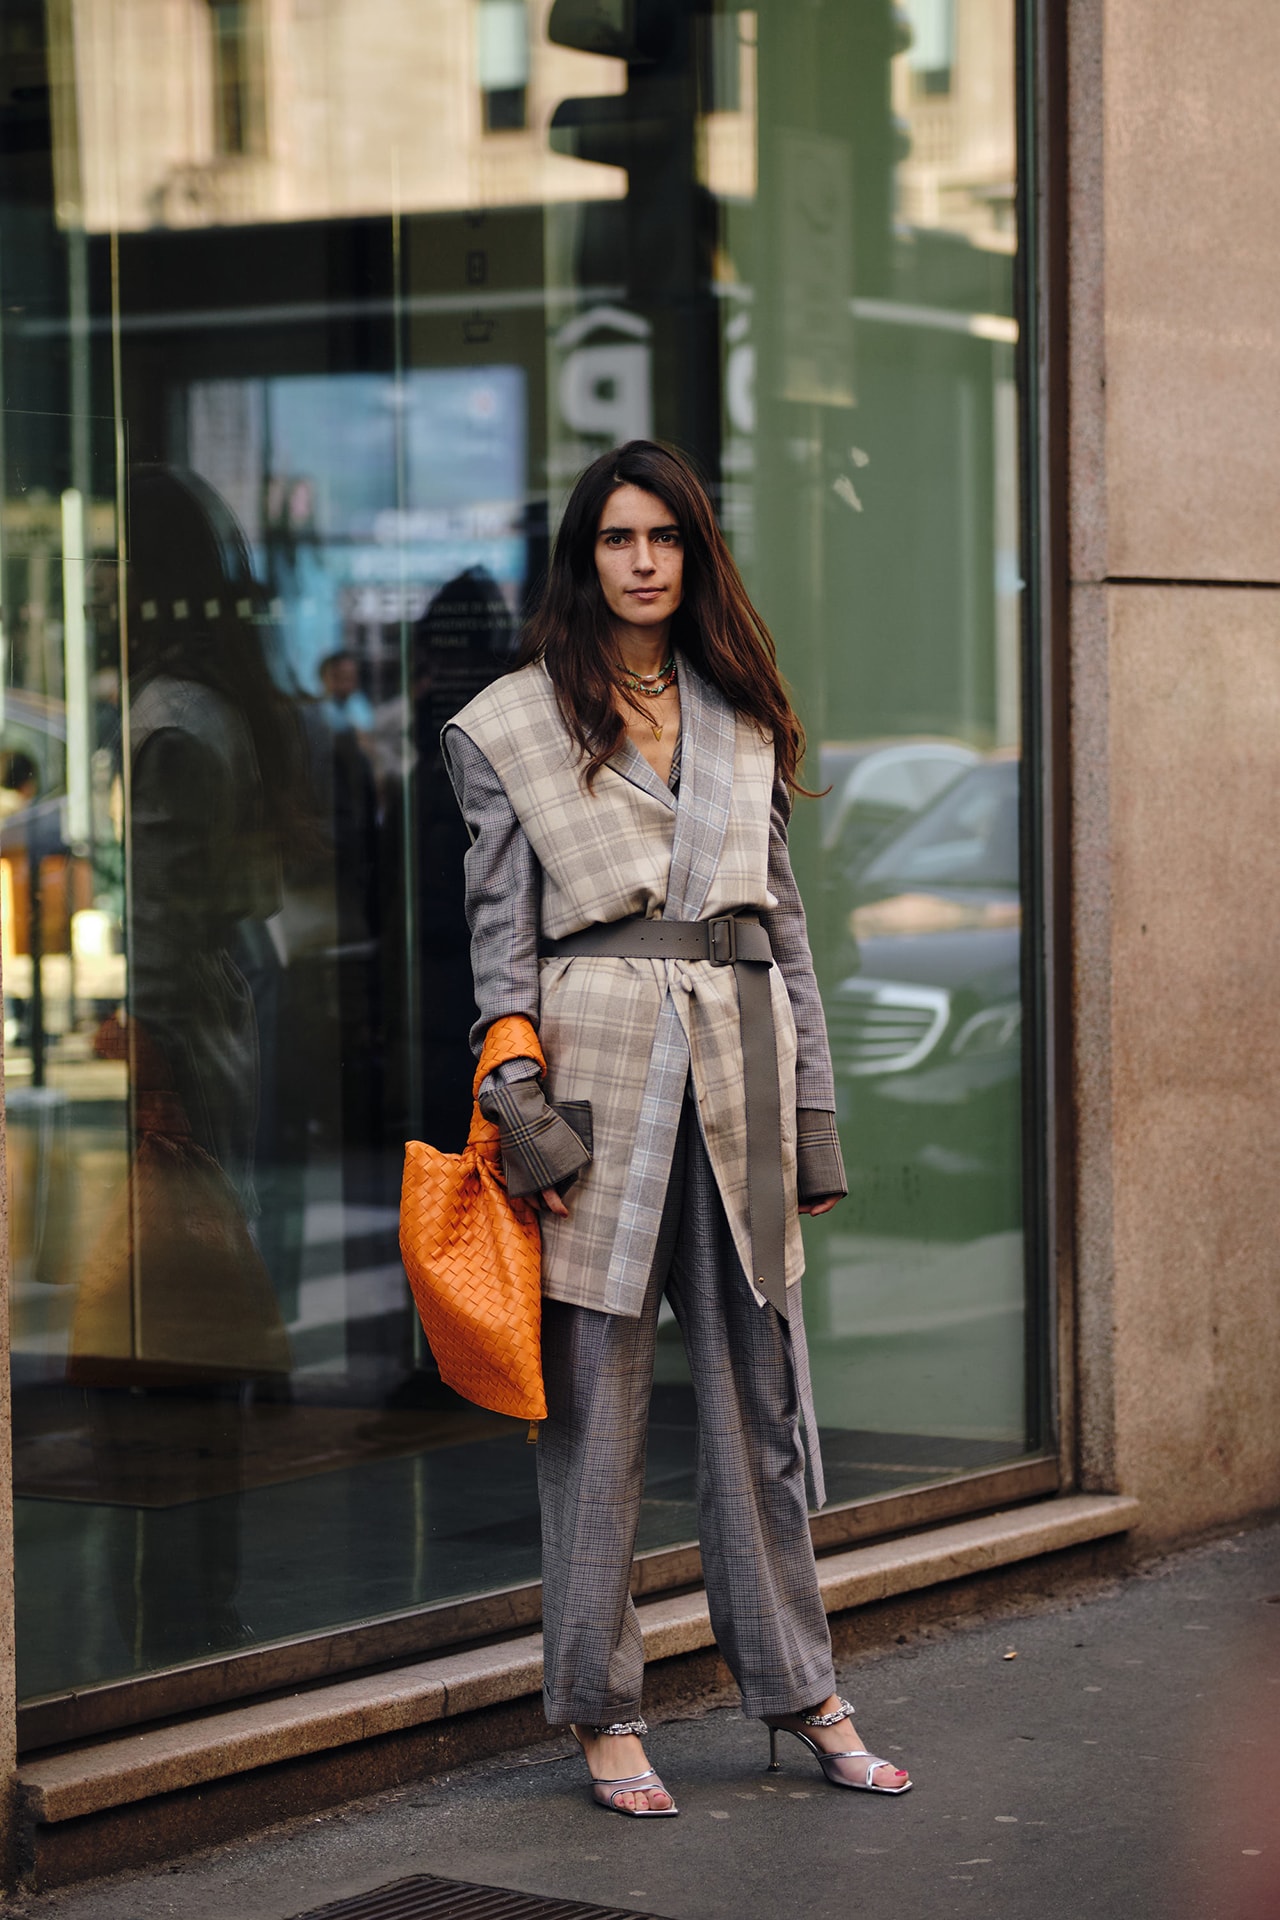 Bottega Veneta Twist Bag Orange Street Style Trends Milan Fashion Week Fall Winter 2020 FW20 influencer